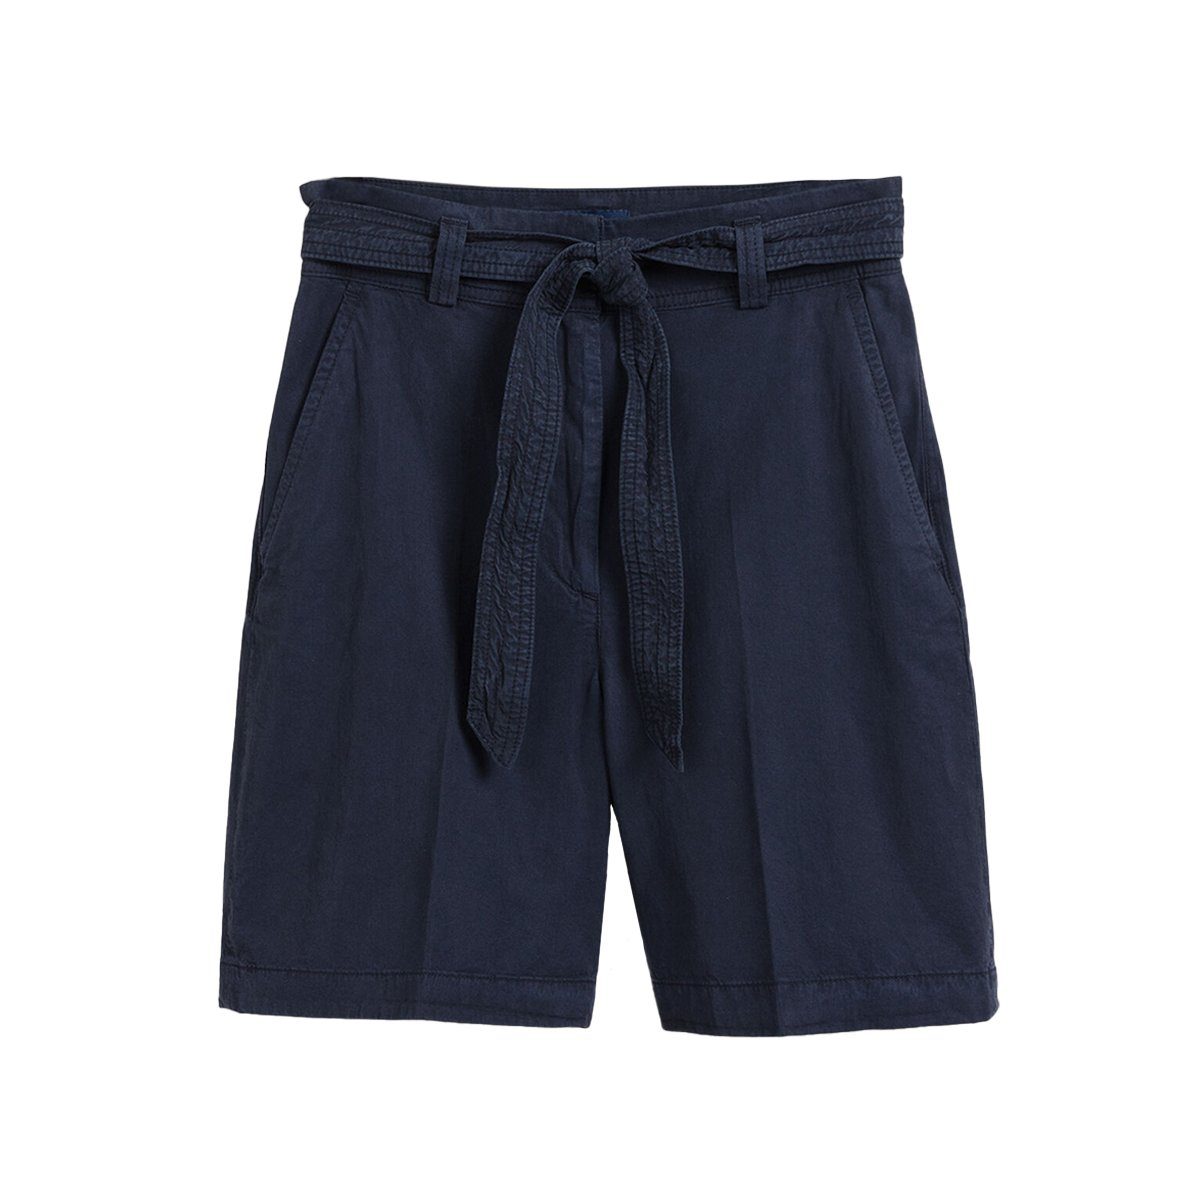 Gant Shorts 4020064 Damen Fluid Shorts mit Bindegürtel Blau(433) | Shorts